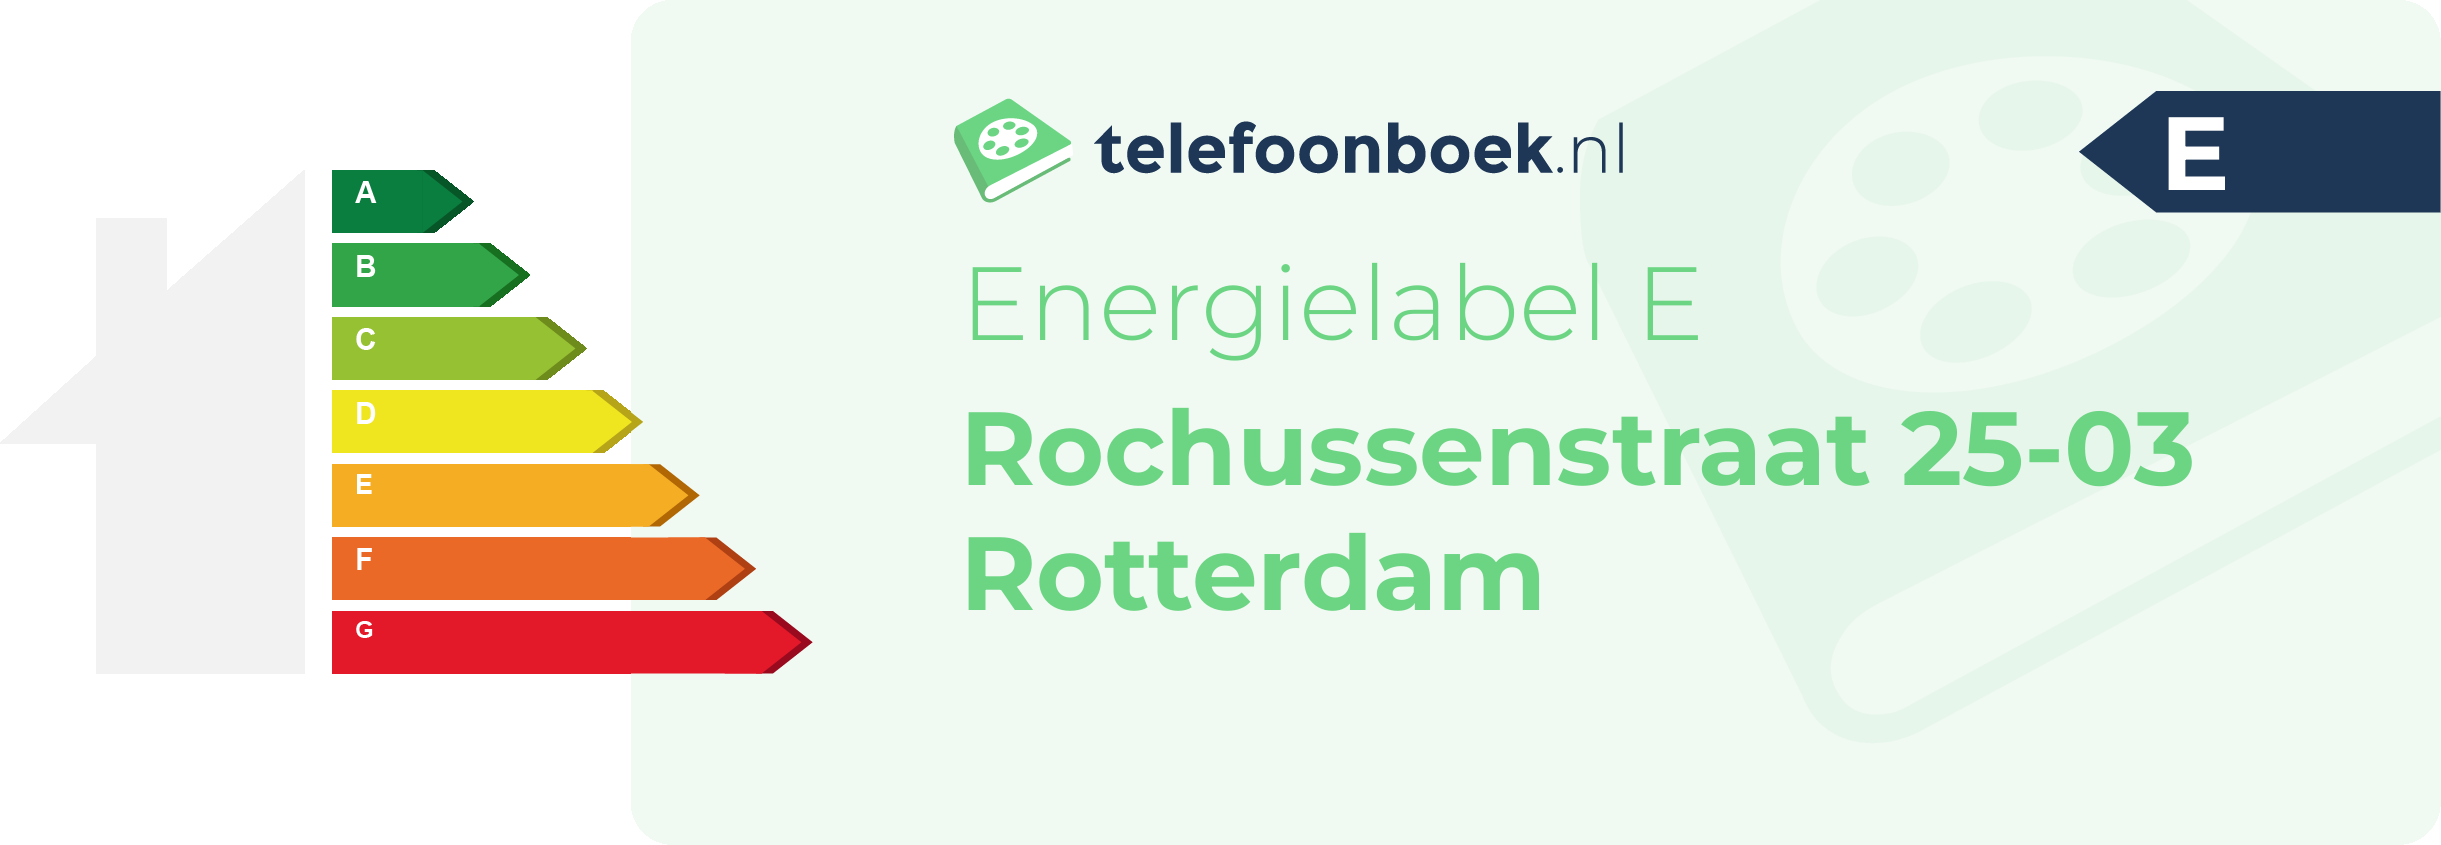 Energielabel Rochussenstraat 25-03 Rotterdam